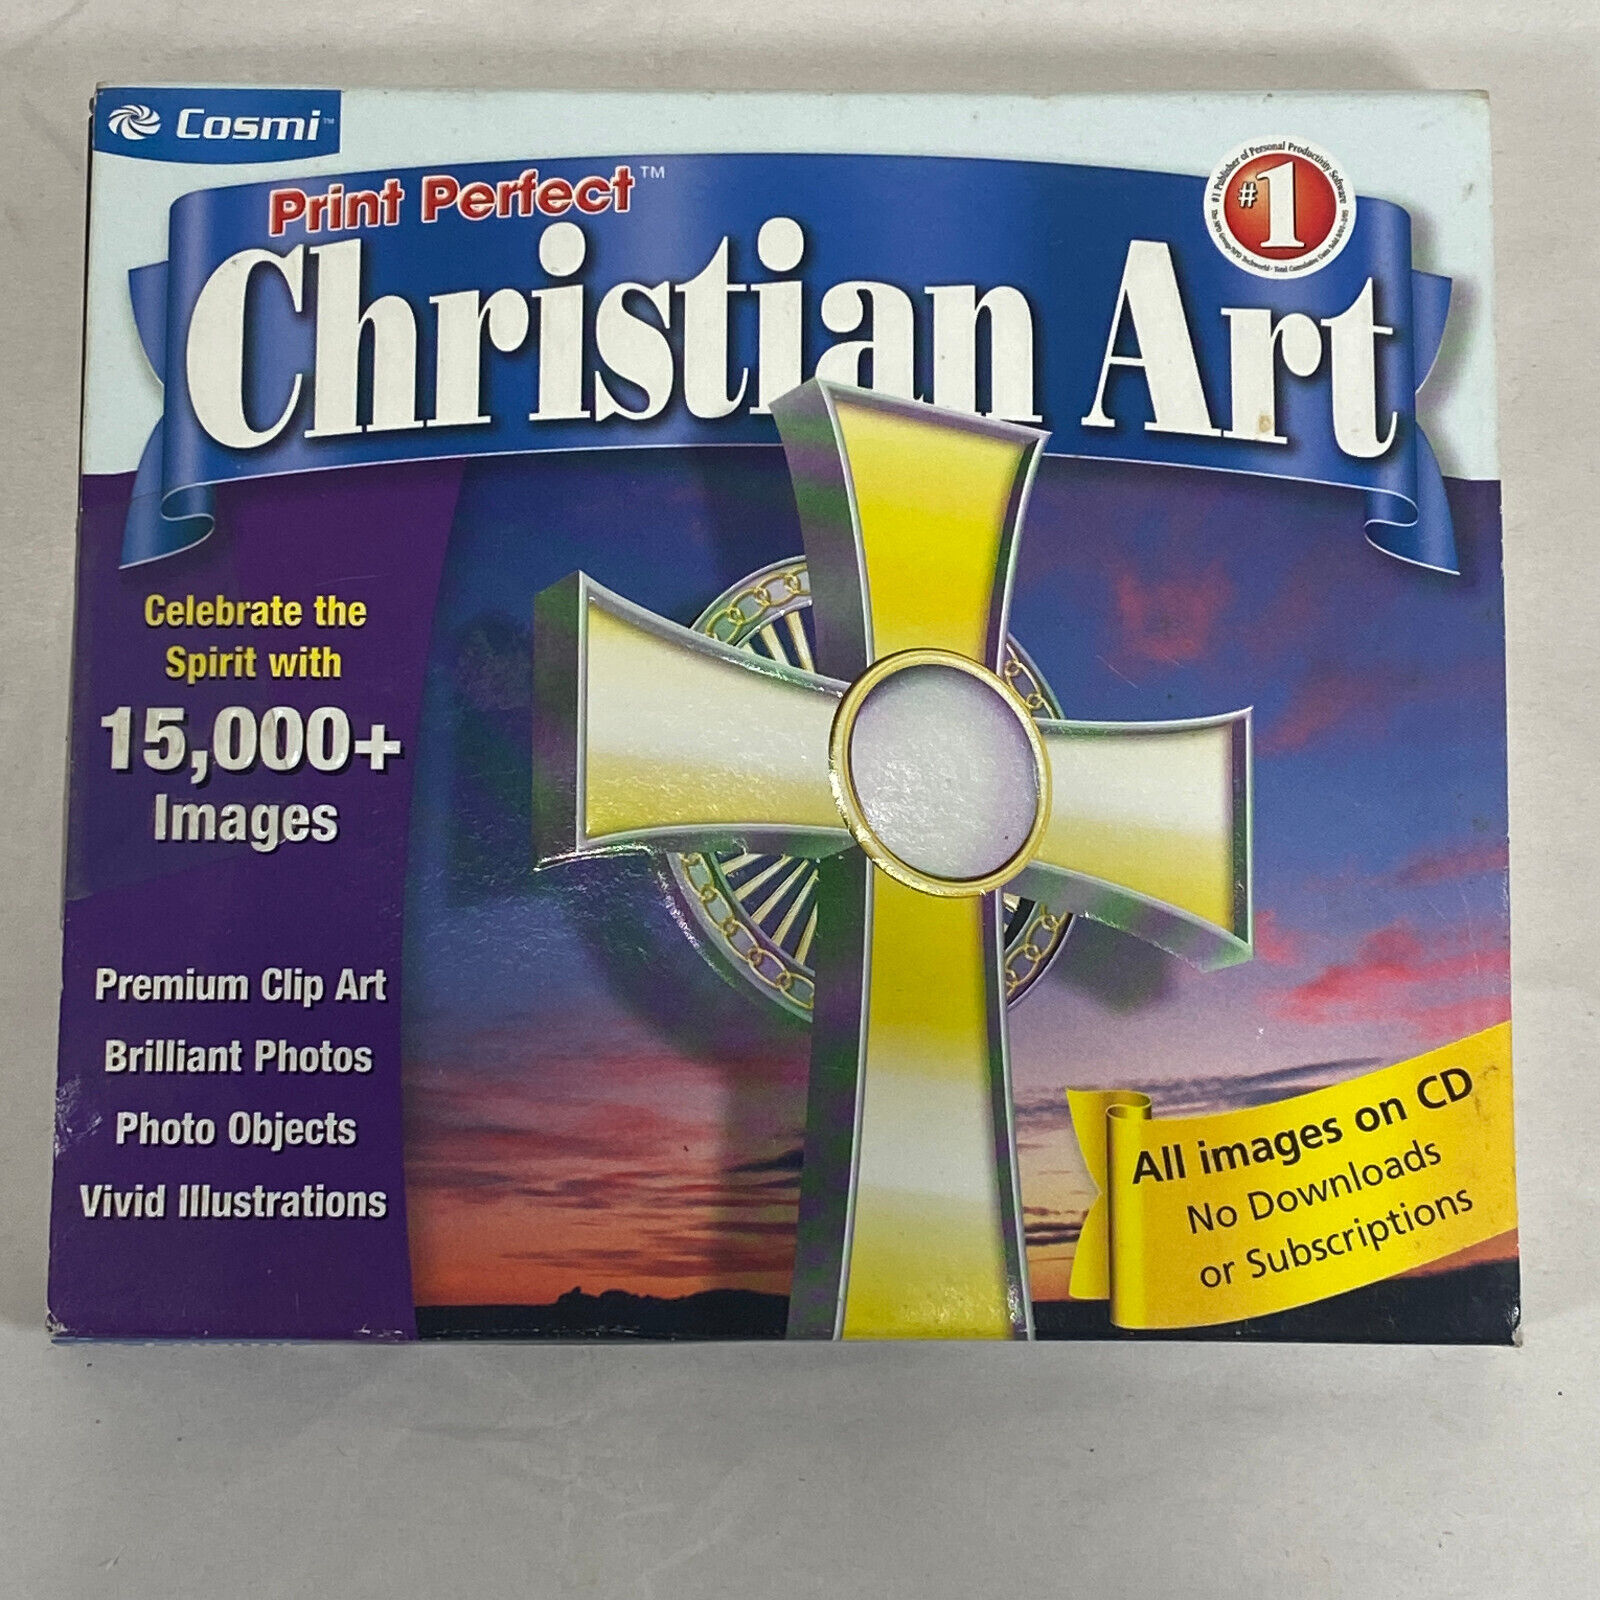 Cosmi Print Perfect Christian Art CD Compact Disc